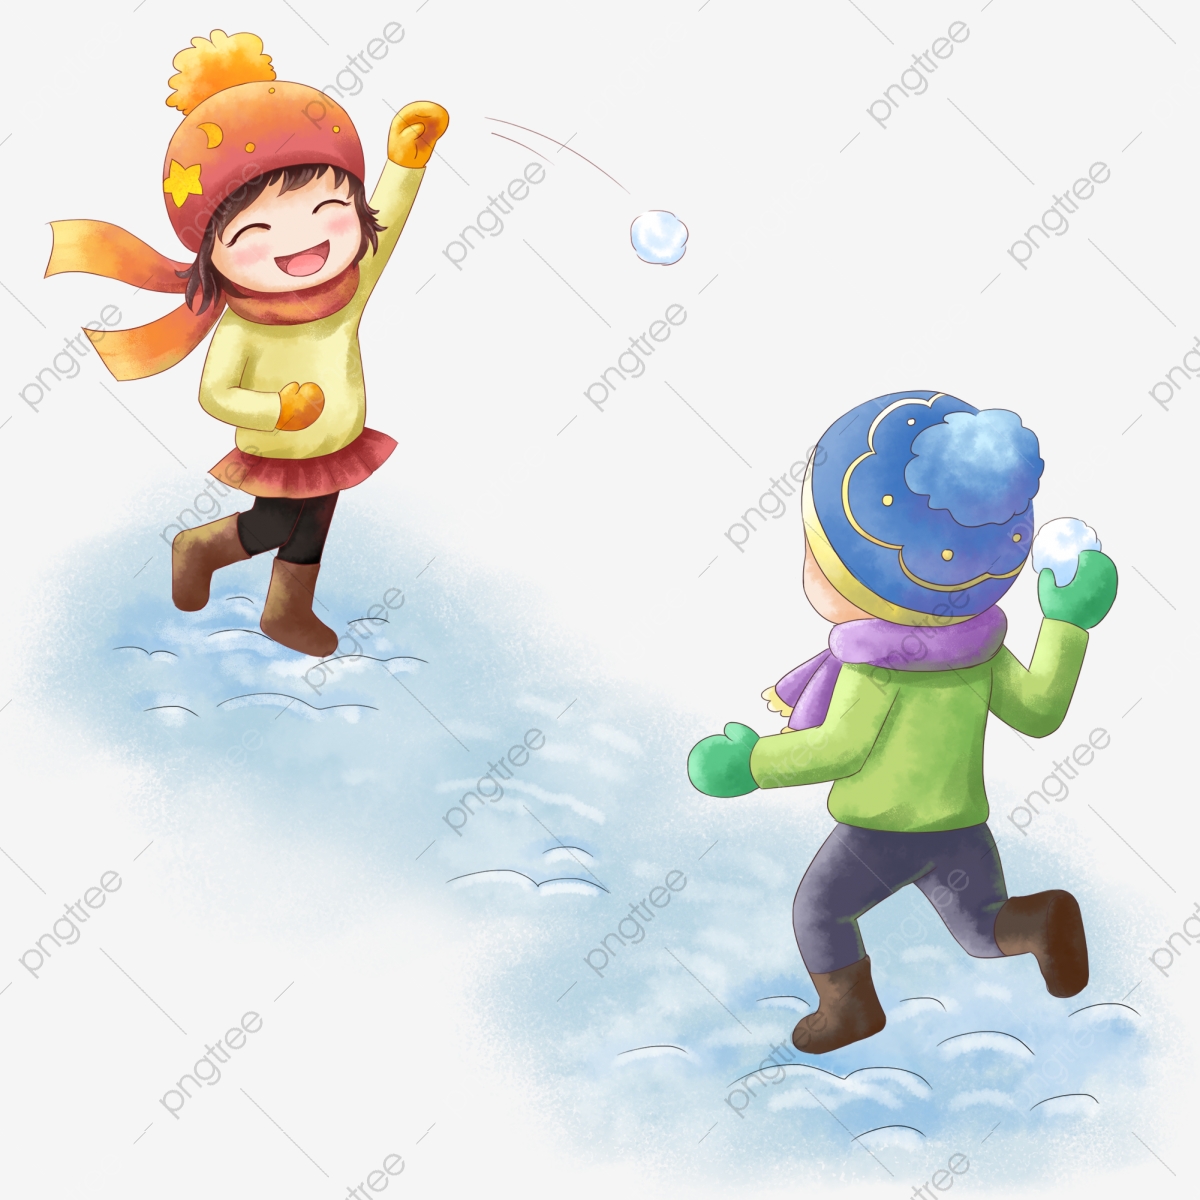 snowball clipart snow game